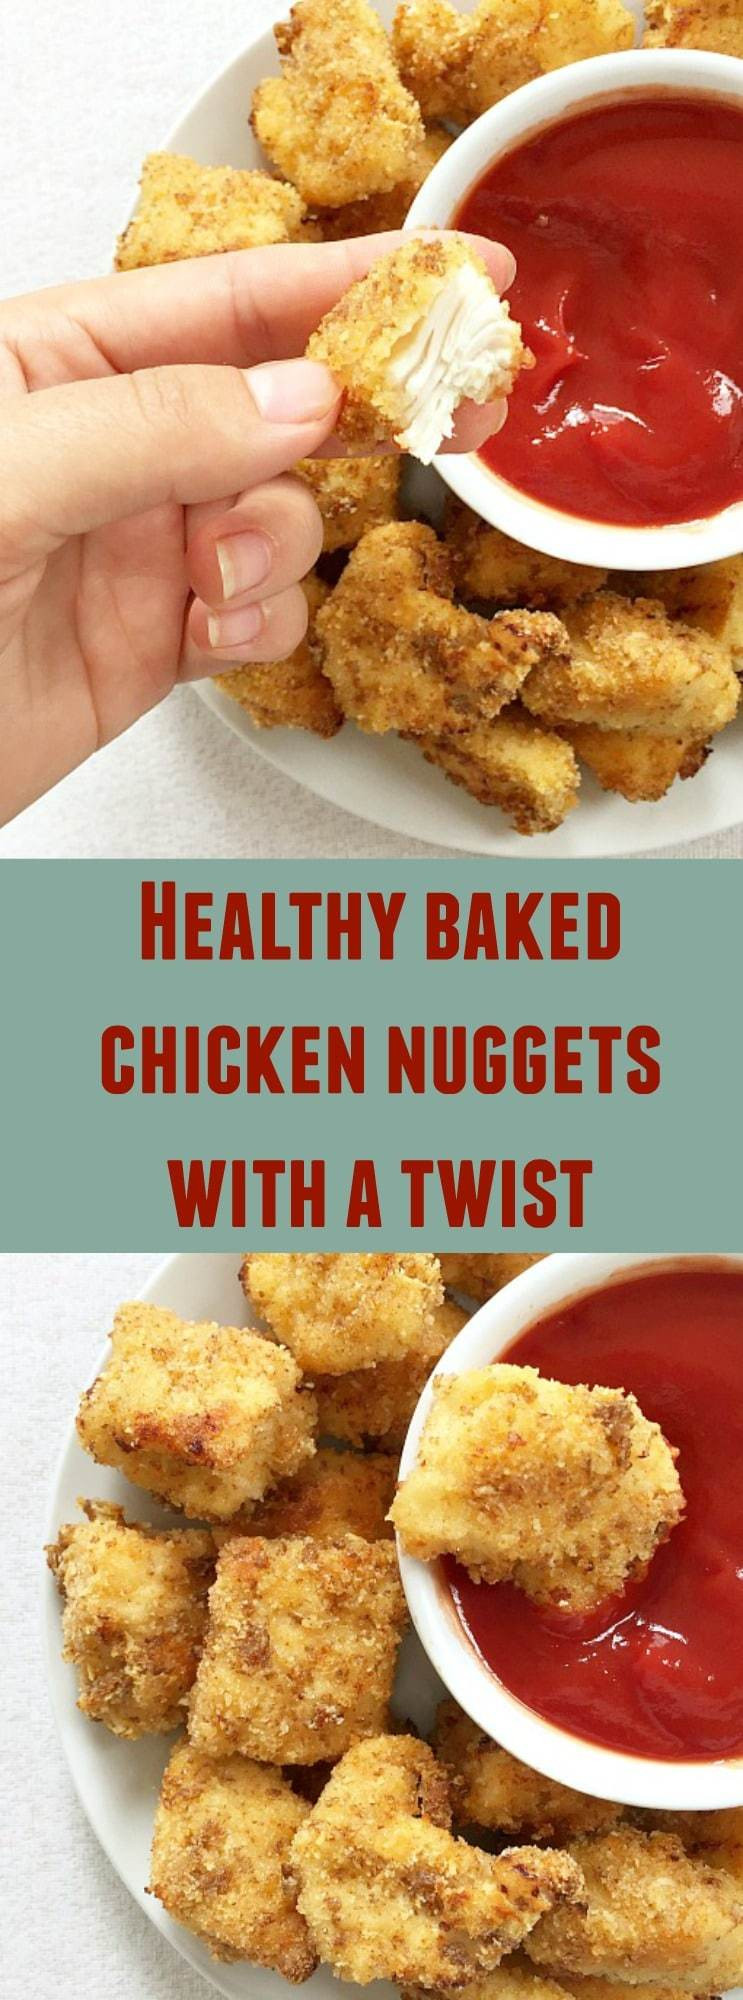 Baked Chicken Nuggets Recipe
 Homemade chicken nug s recipe